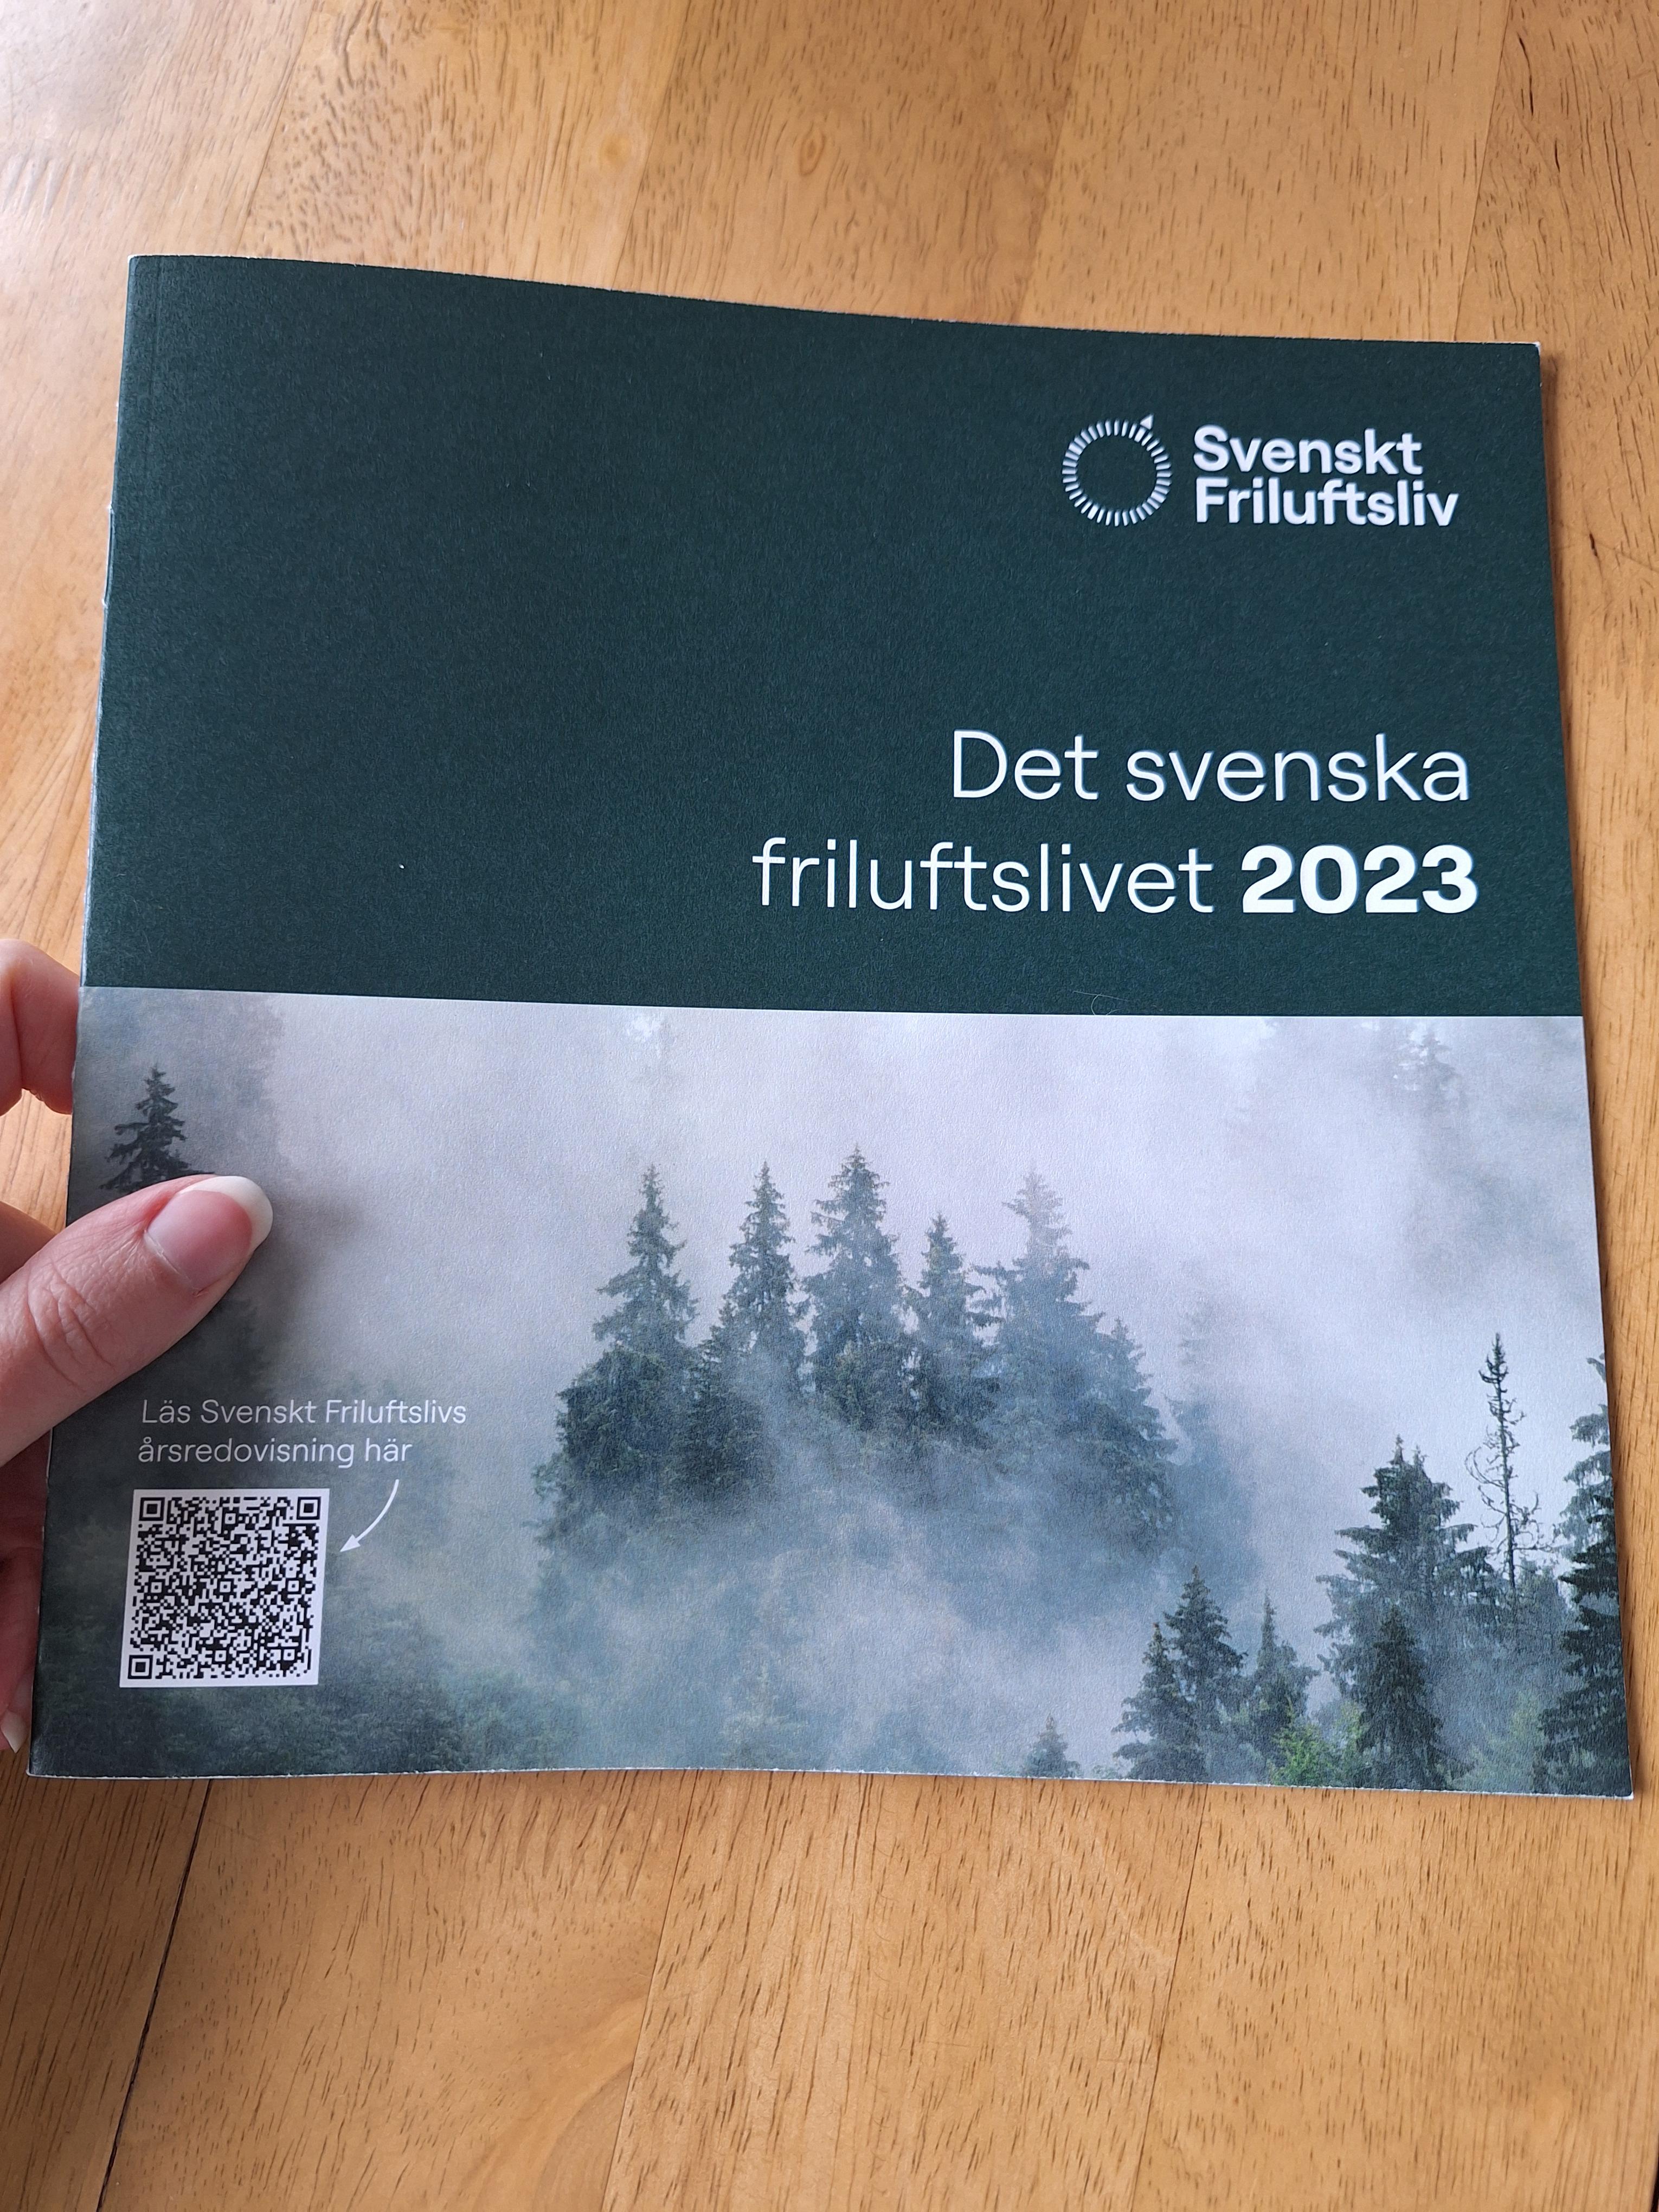 En hand håller i en folder med titeln "Det svenska friluftslivet 2023".